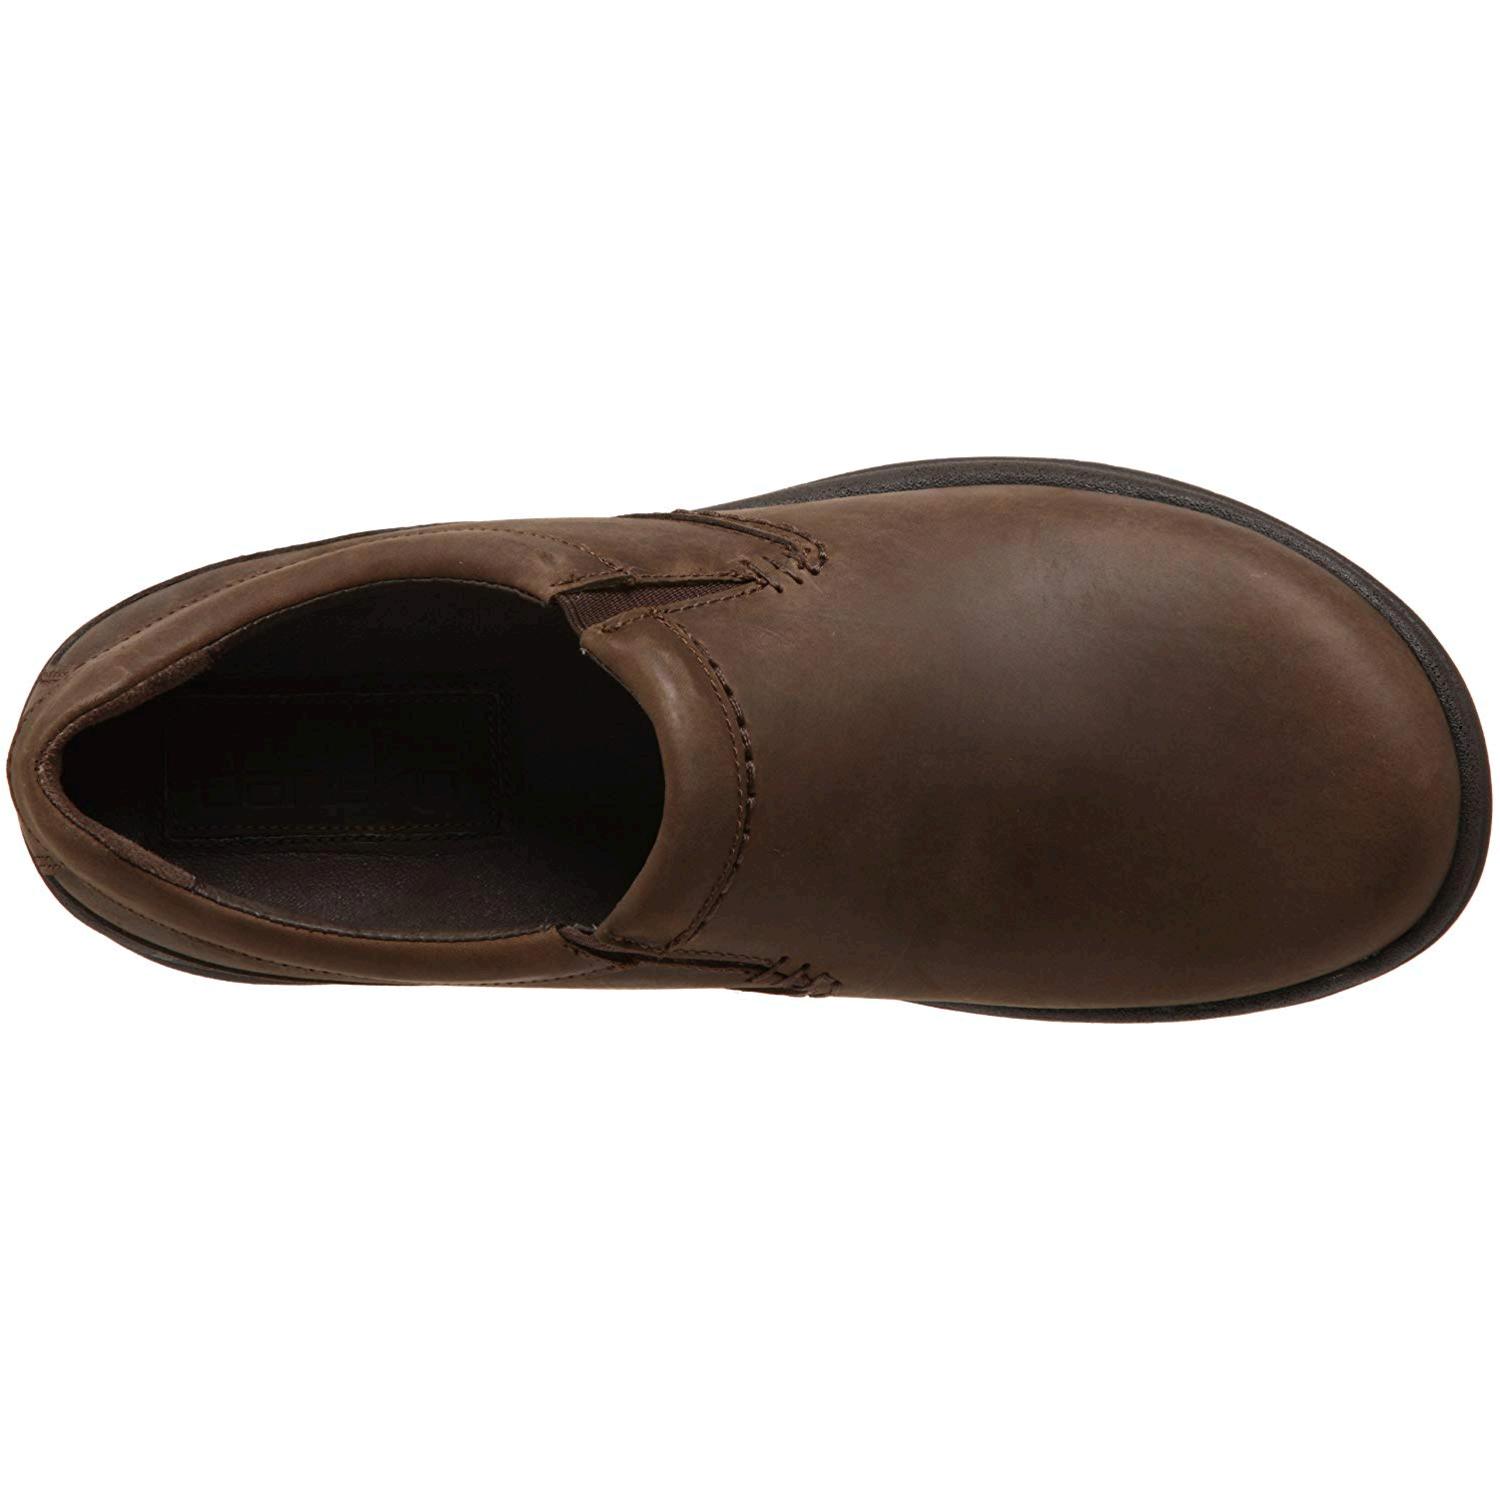 Dansko Mens Wynn Distressed Leather Slip On Casual Clogs, Brown, Size ...